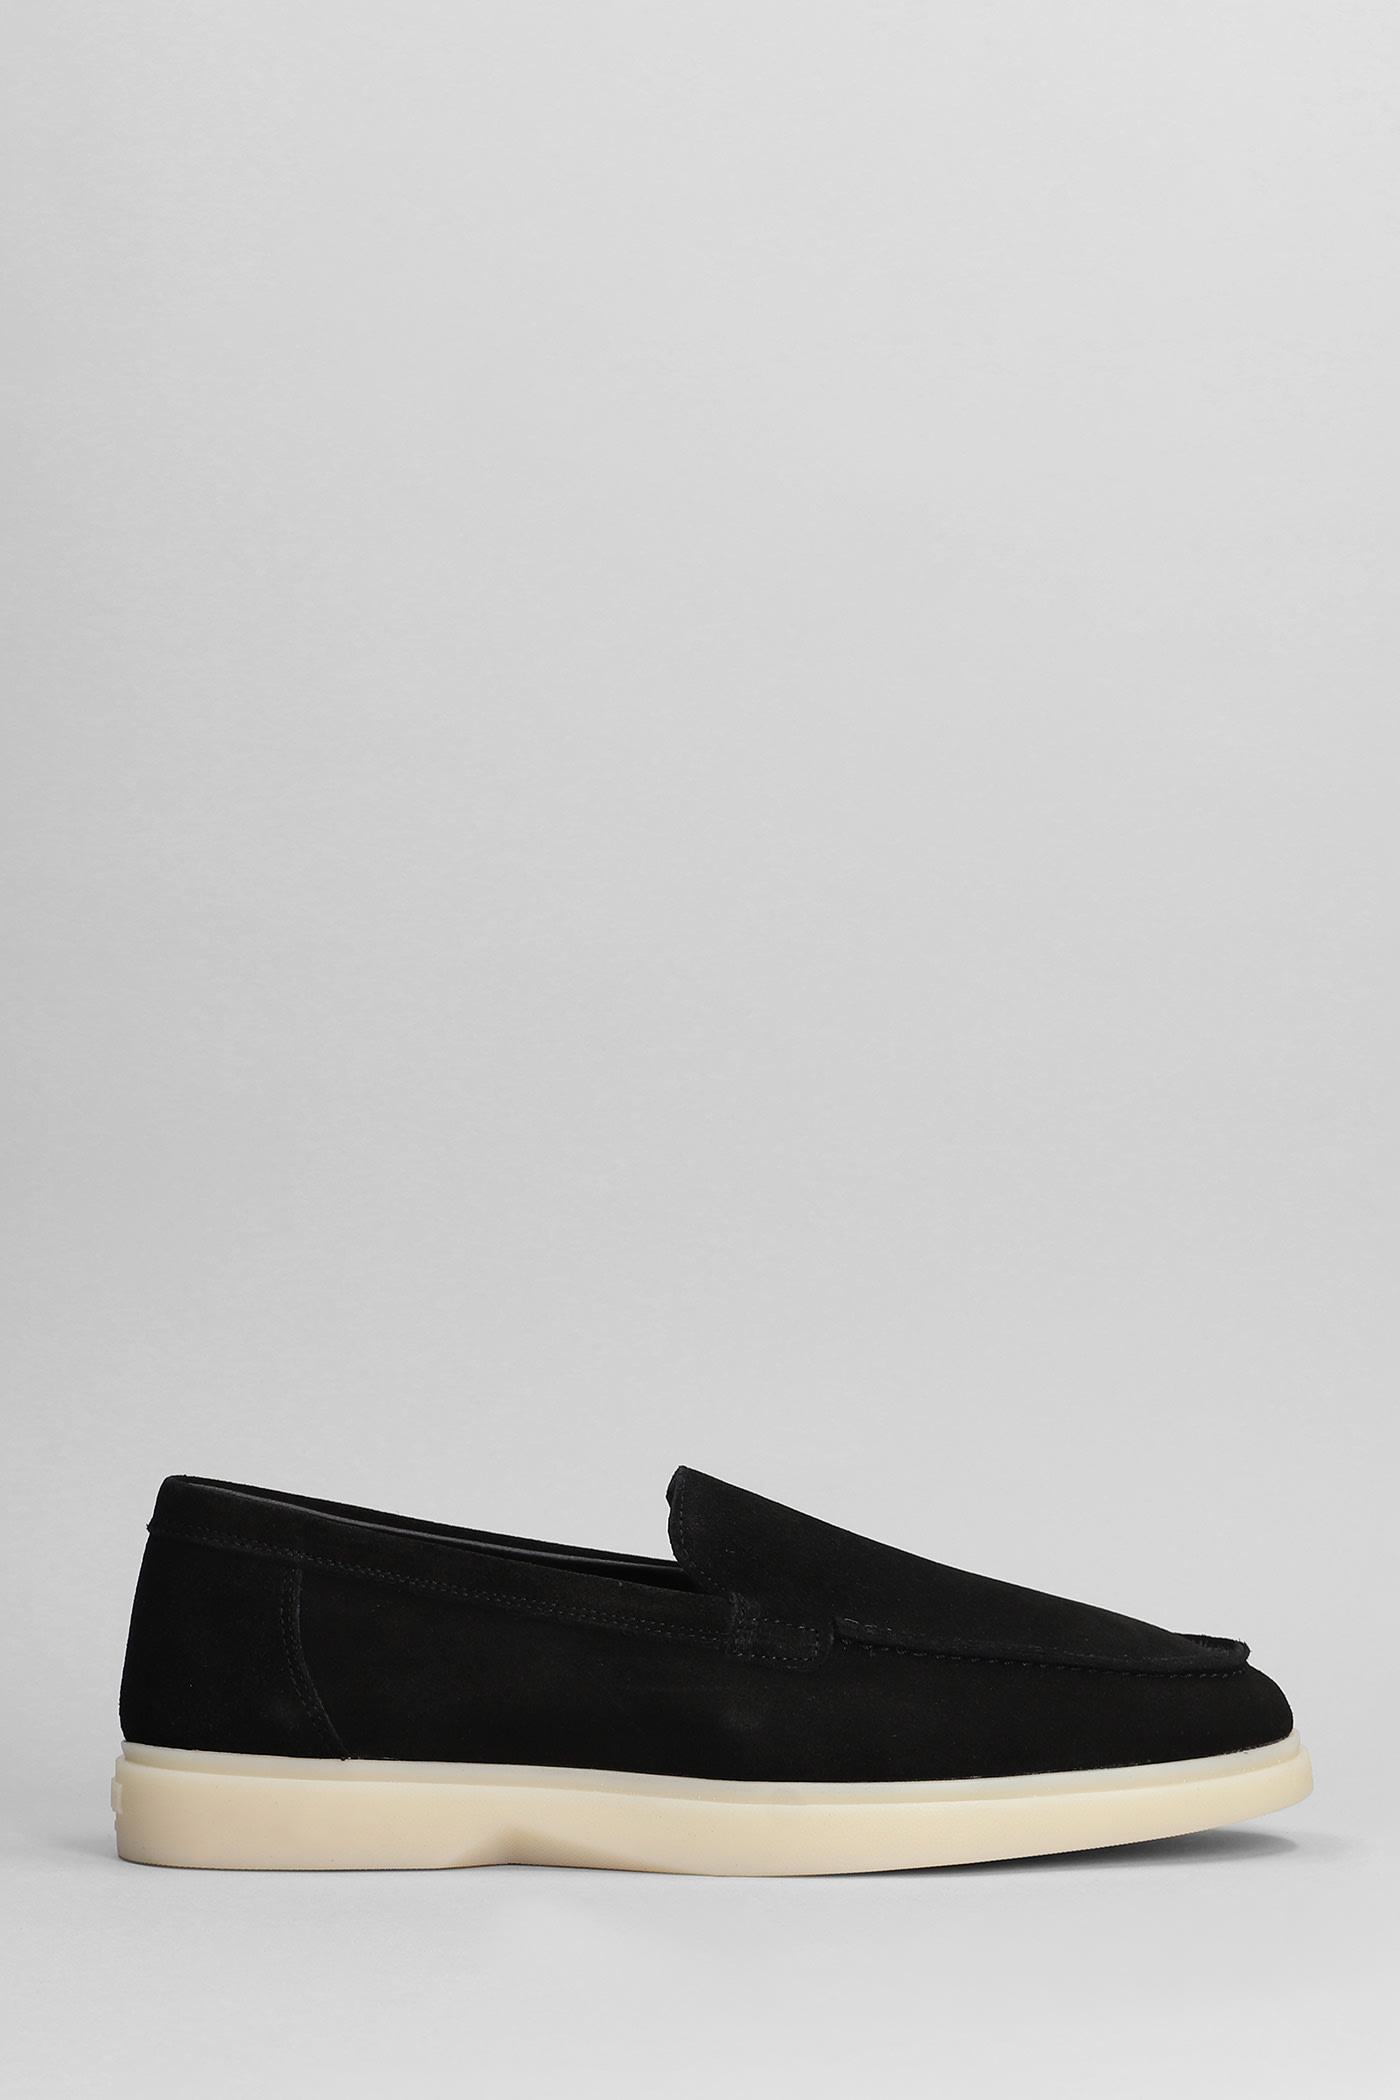 Mason Garments Amalfi Loafers In Black Suede